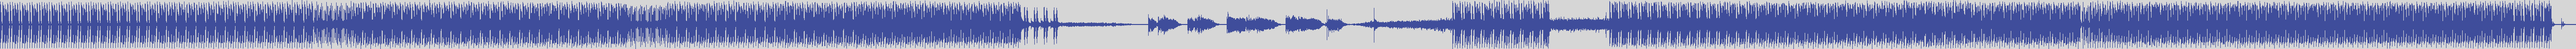 atomic_recordings [AR001] Joe Cerrone - Neighbors Gosts [Ibiza Mix] audio wave form